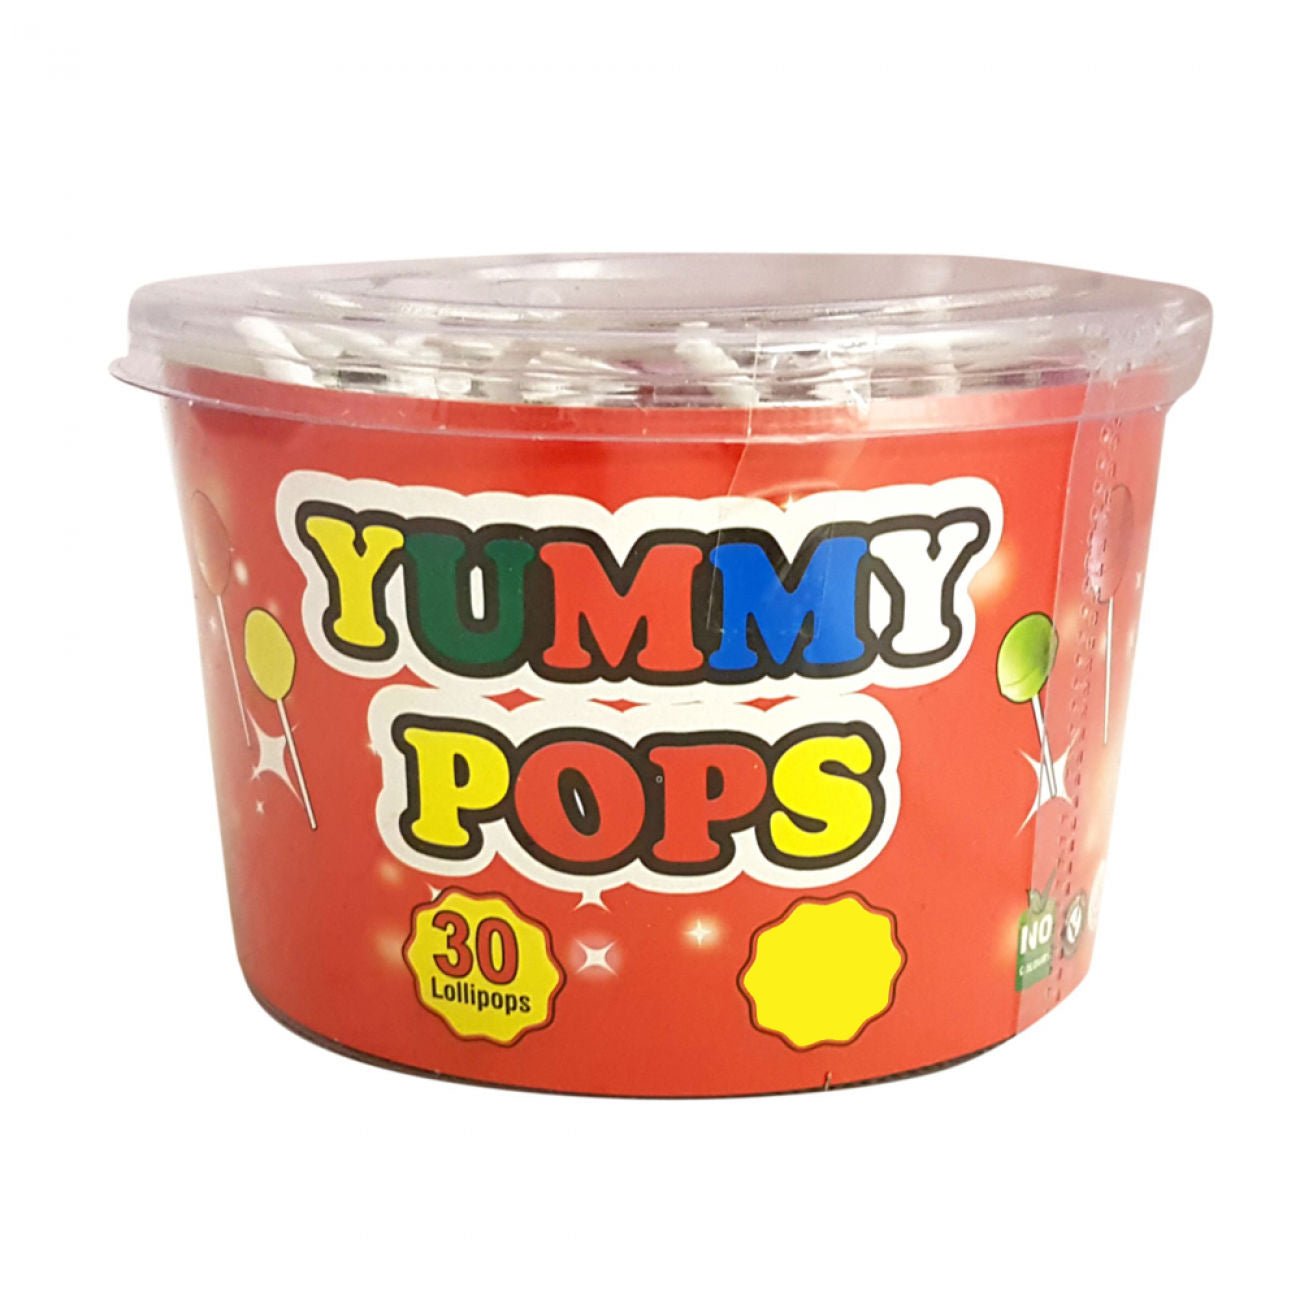 Confectionery World Yummy Pops Lollipop (30 pcs) - Aytac Foods